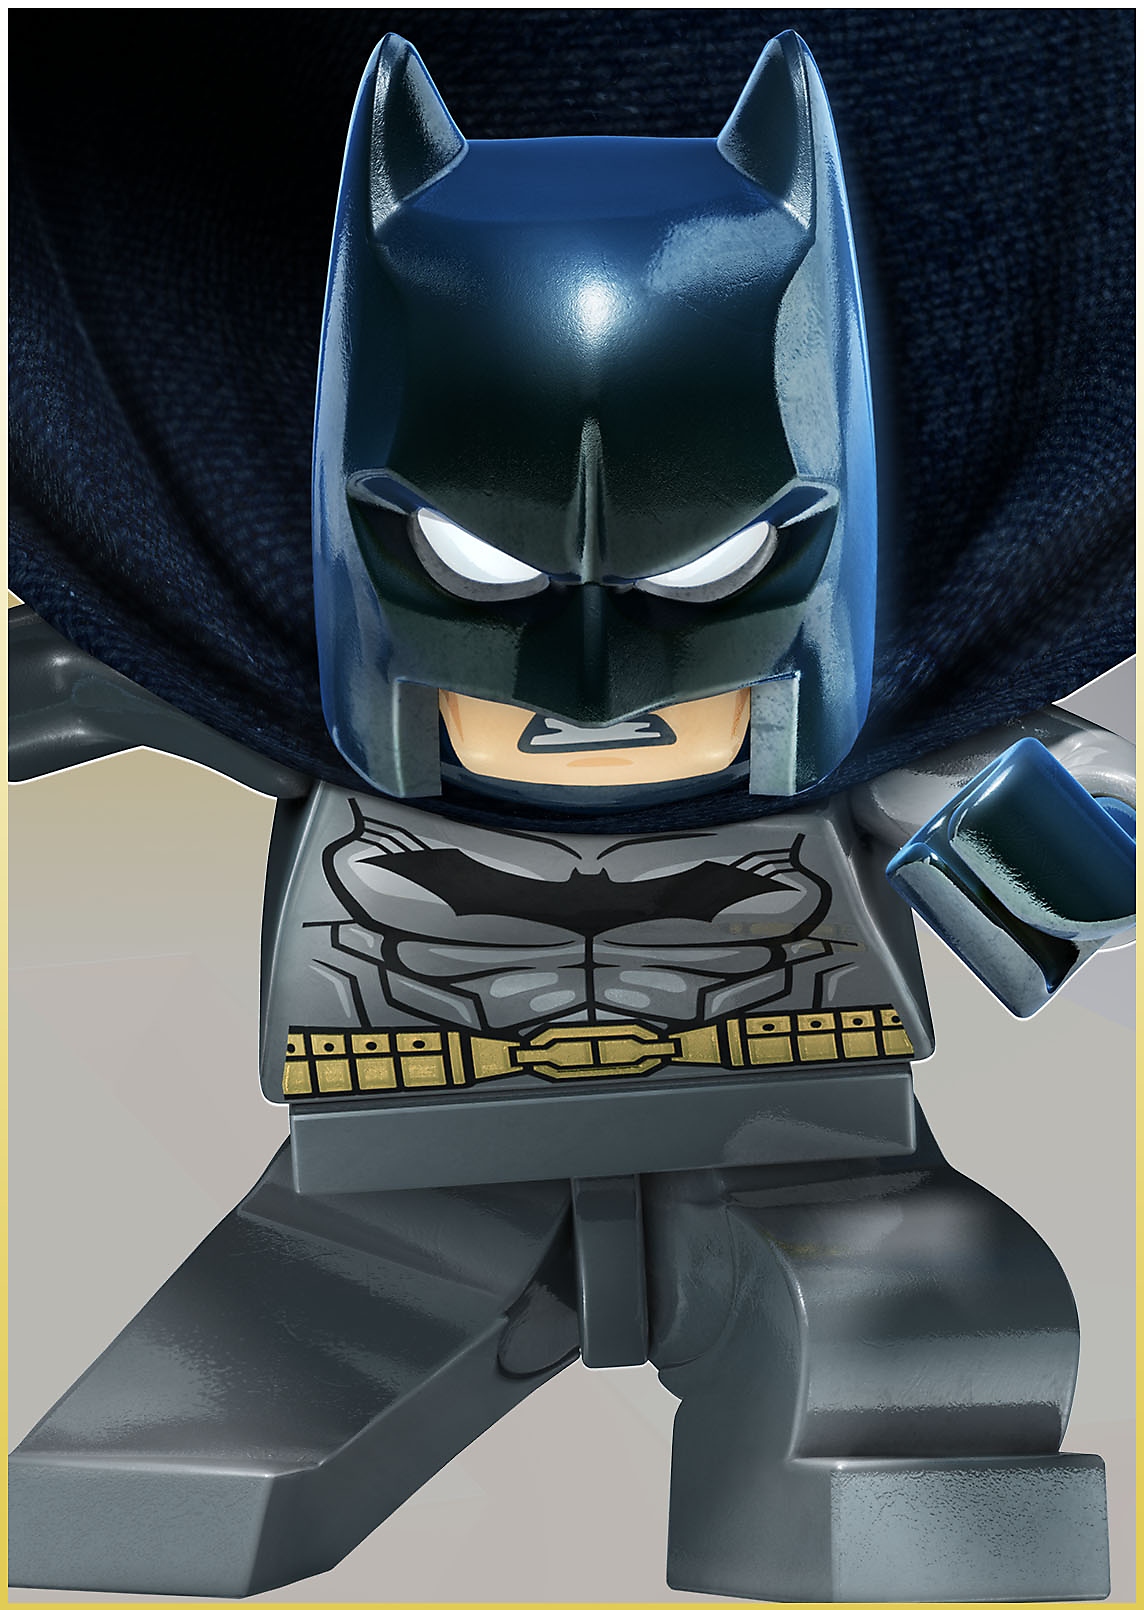 Lego Batman syöksähtelemässä alaspäin